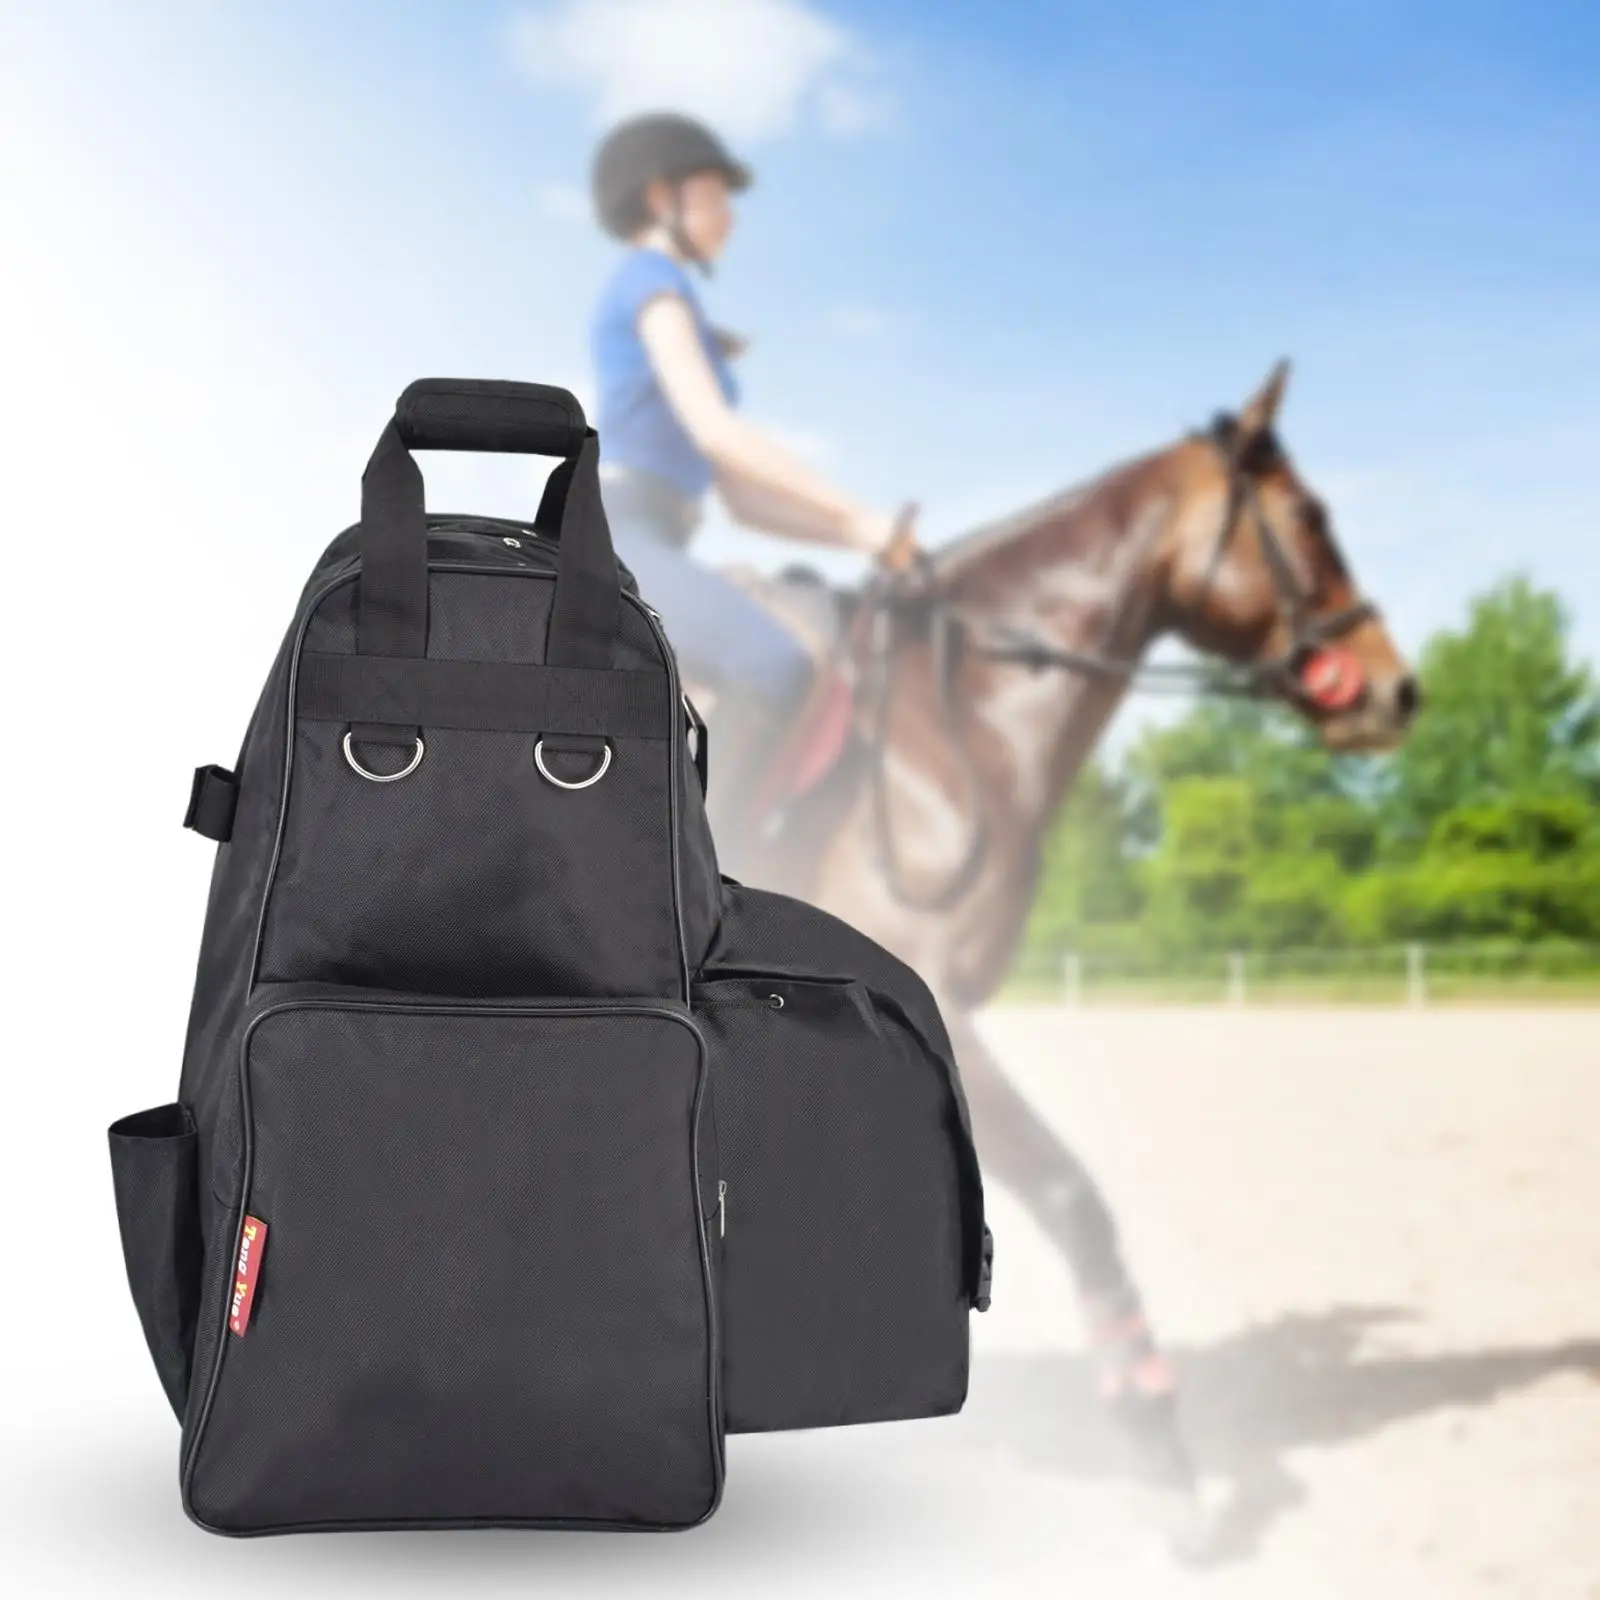 Portable Equestrian Bag Equipment Backpack Horse Riding Helmet Gloves Pants Leg Guards Whip Storage Bag Large Capacity